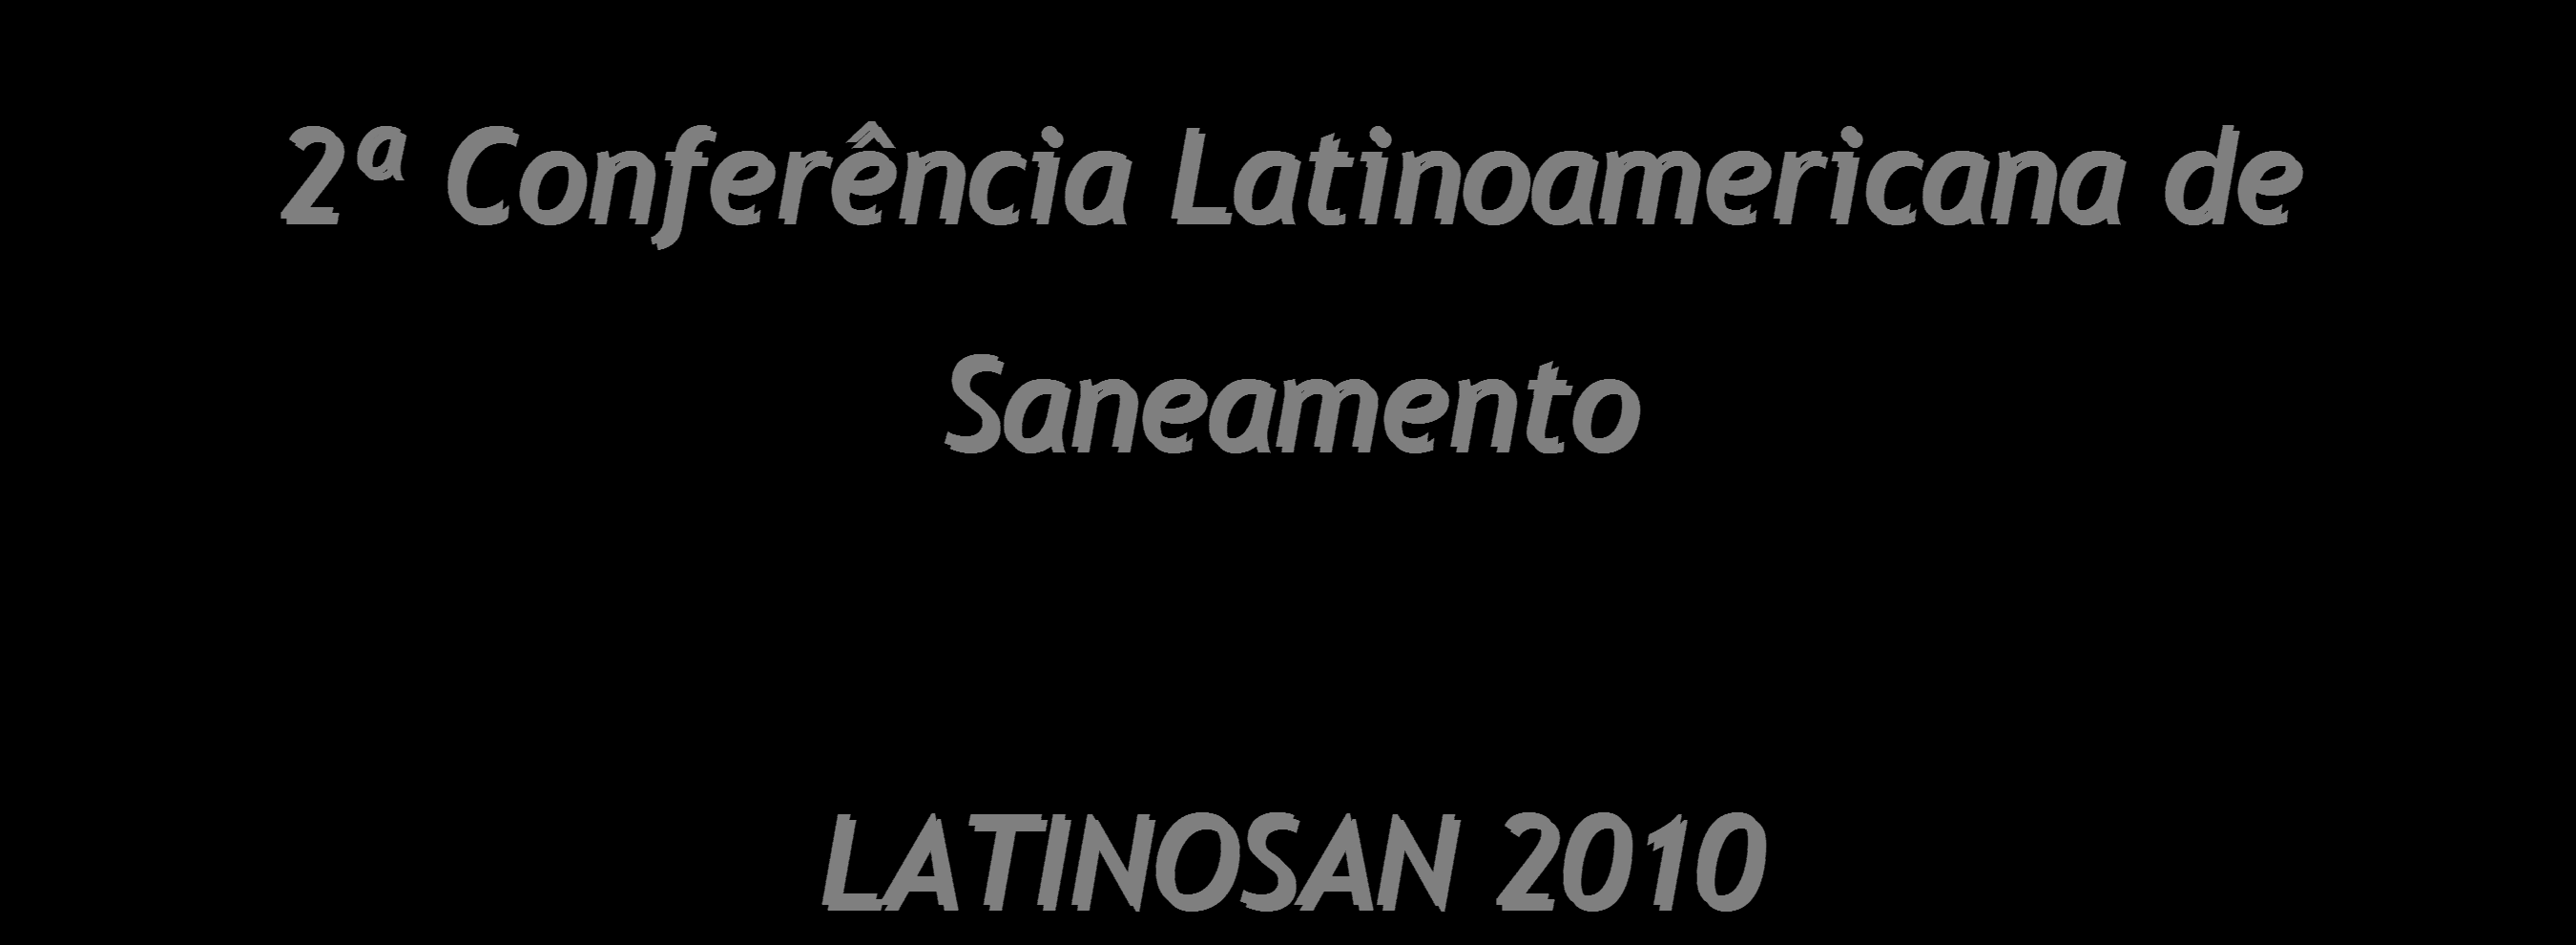 2ª Conferência Latinoamericana de Saneamento LATINOSAN 2010 Fernando Pinto Dias